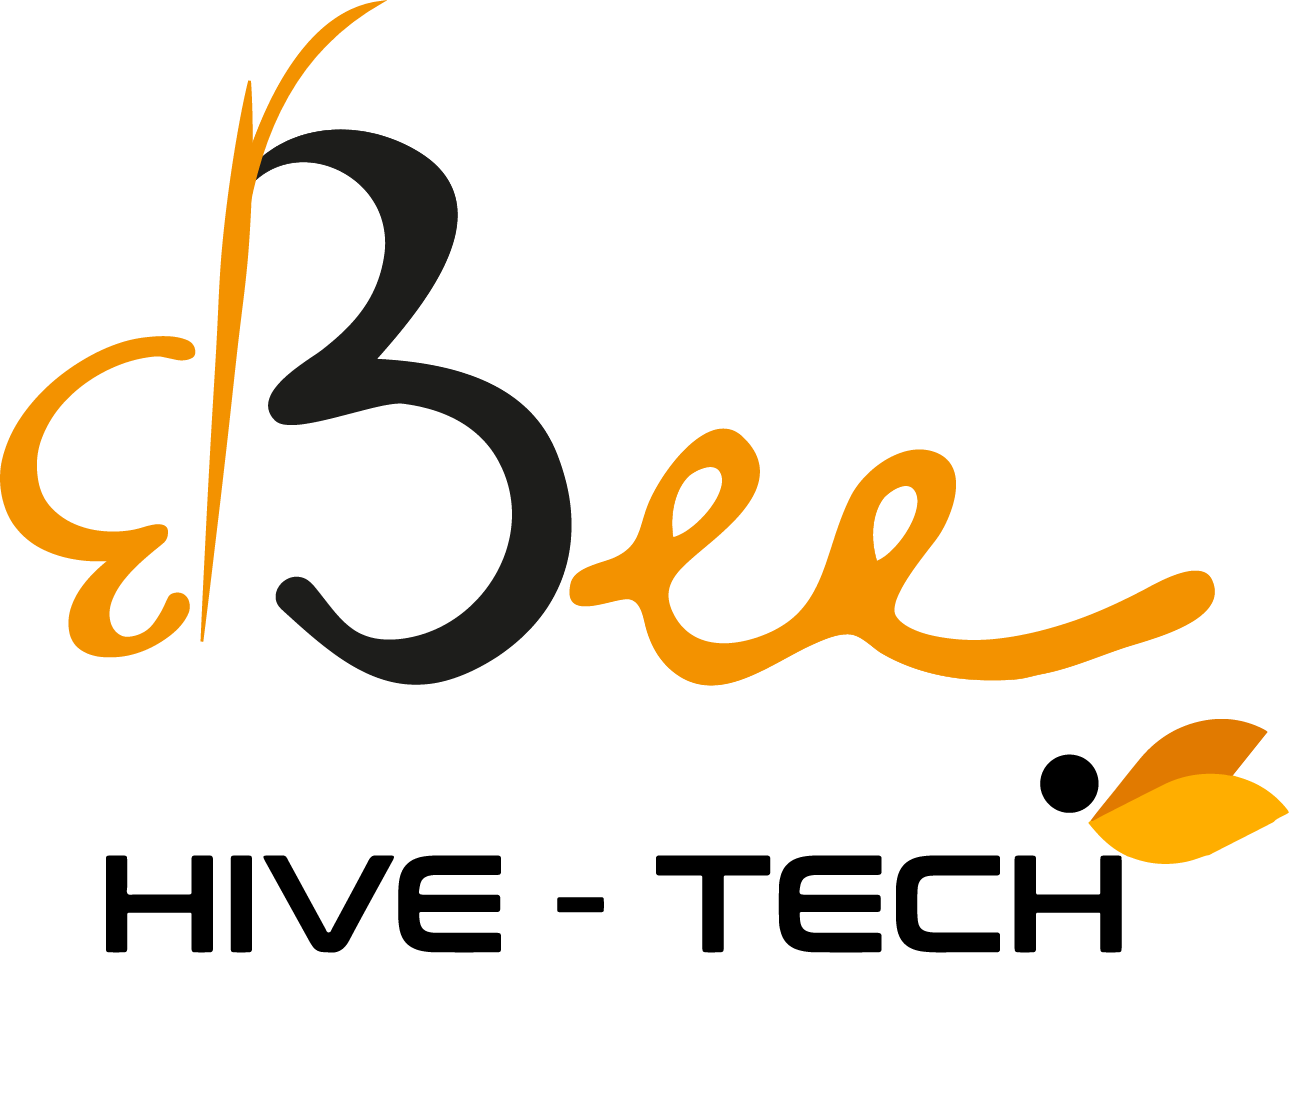 Bee Hive - Tech